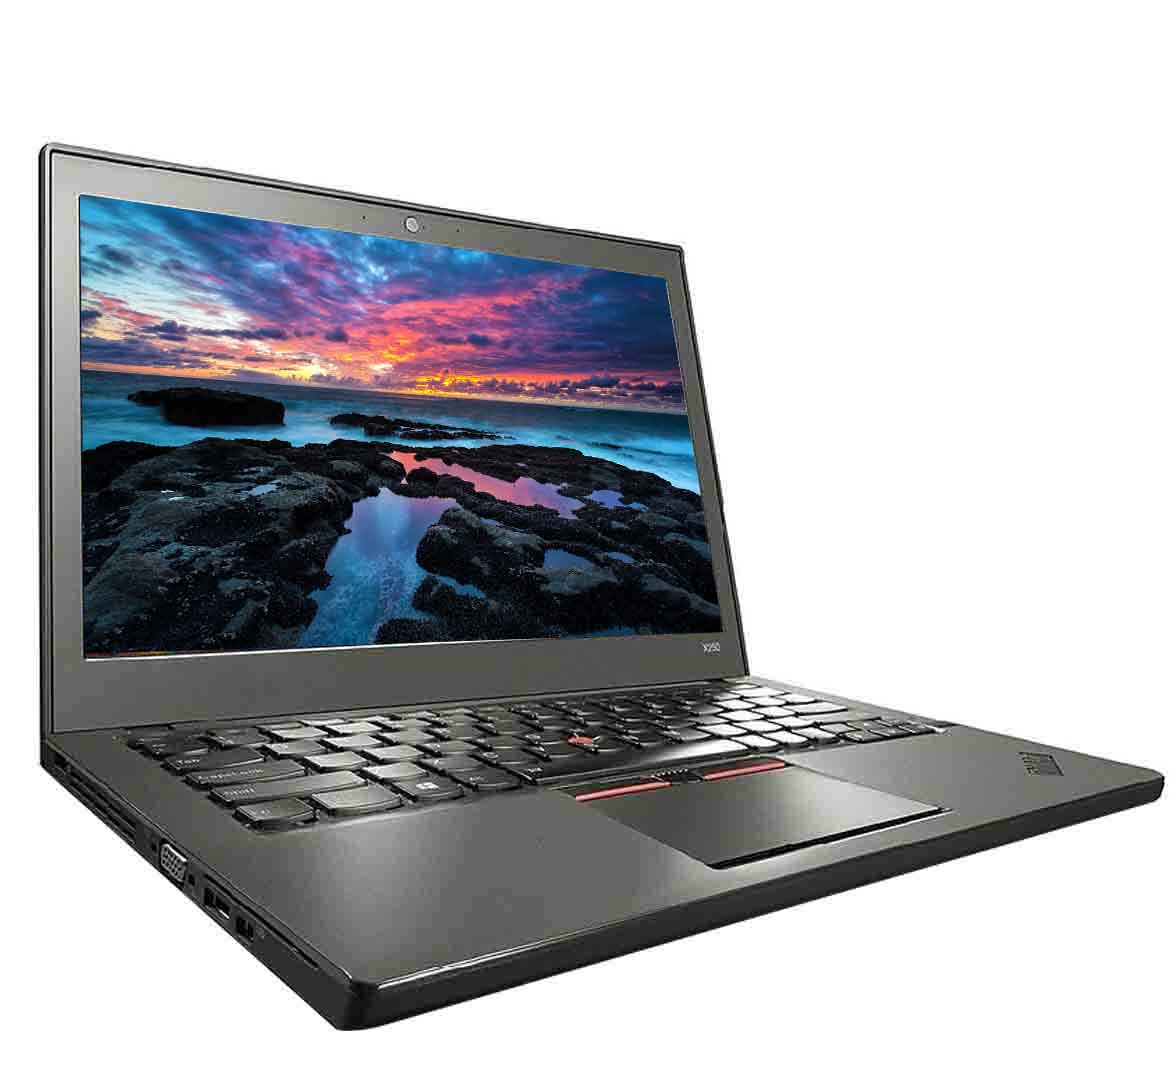 Lenovo ThinkPad X250 Business Laptop, Intel Core i5-4th Generation CPU, 8GB RAM, 256GB SSD, 12.5 inch Display, Windows 10